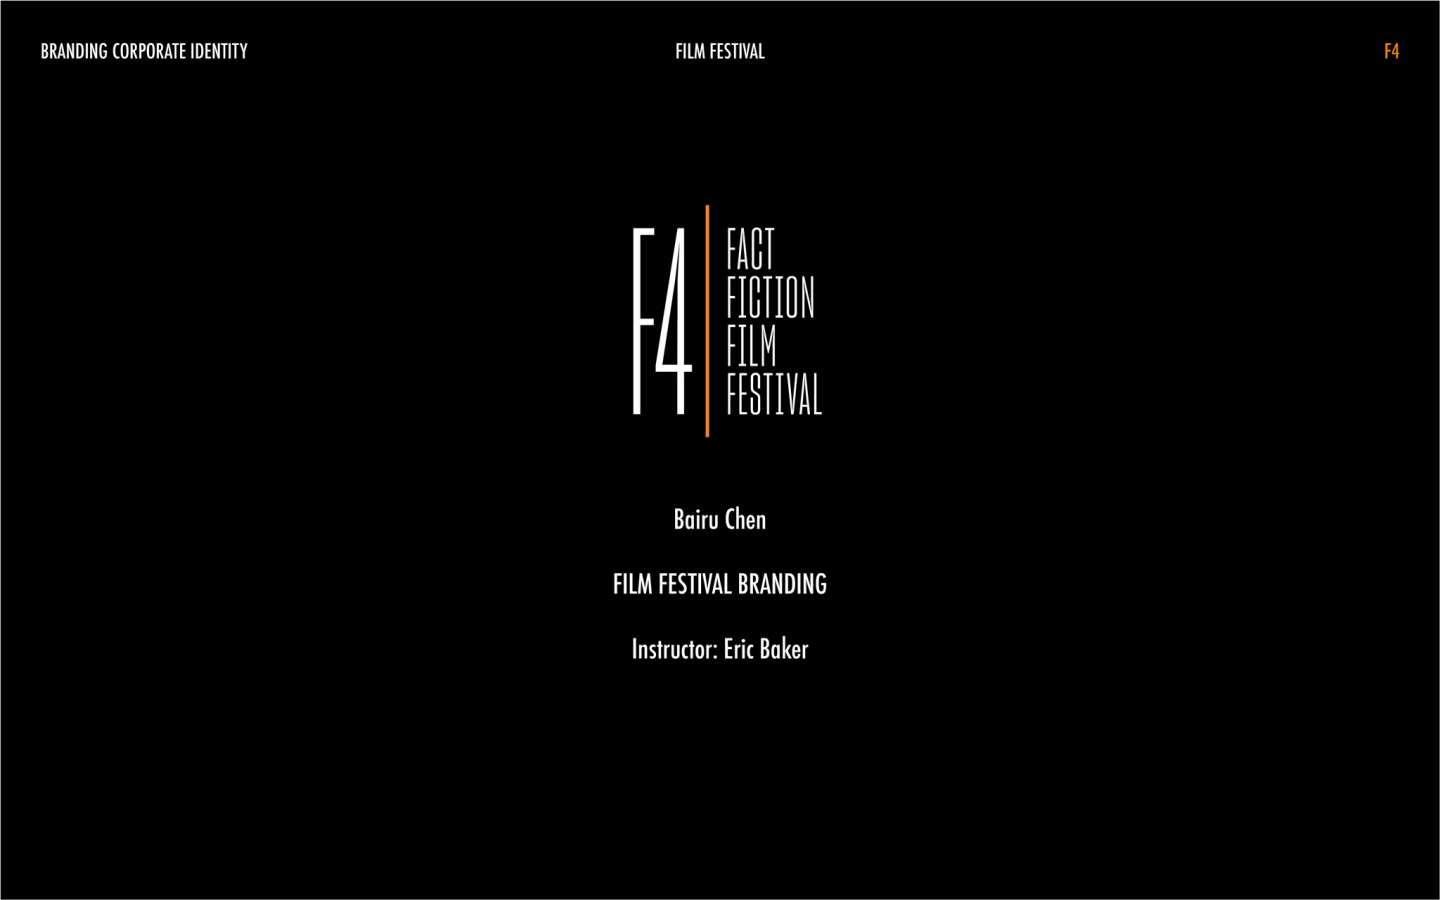 F4 Fact Fiction Film Festival